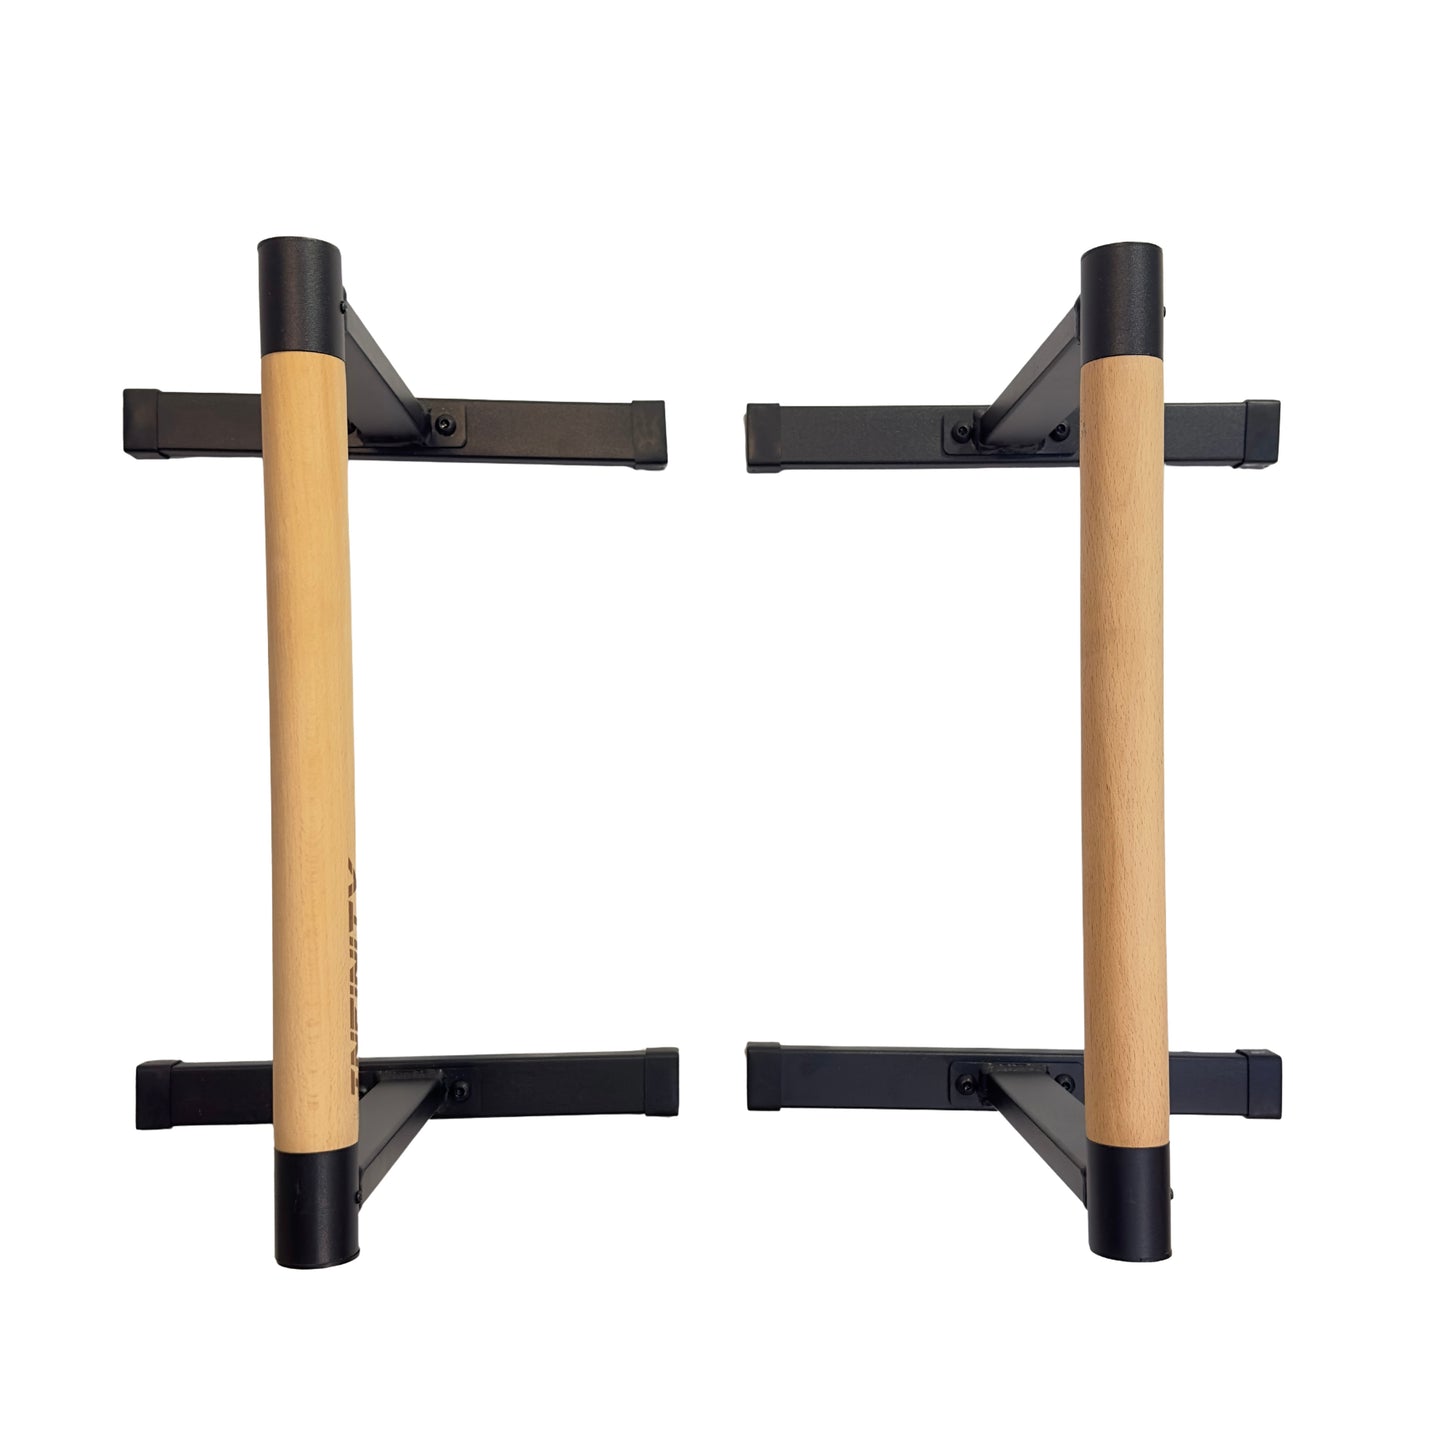 Medium Parallettes with Wooden Handles For Callisthenics gymnastics Crossfit handstand planche